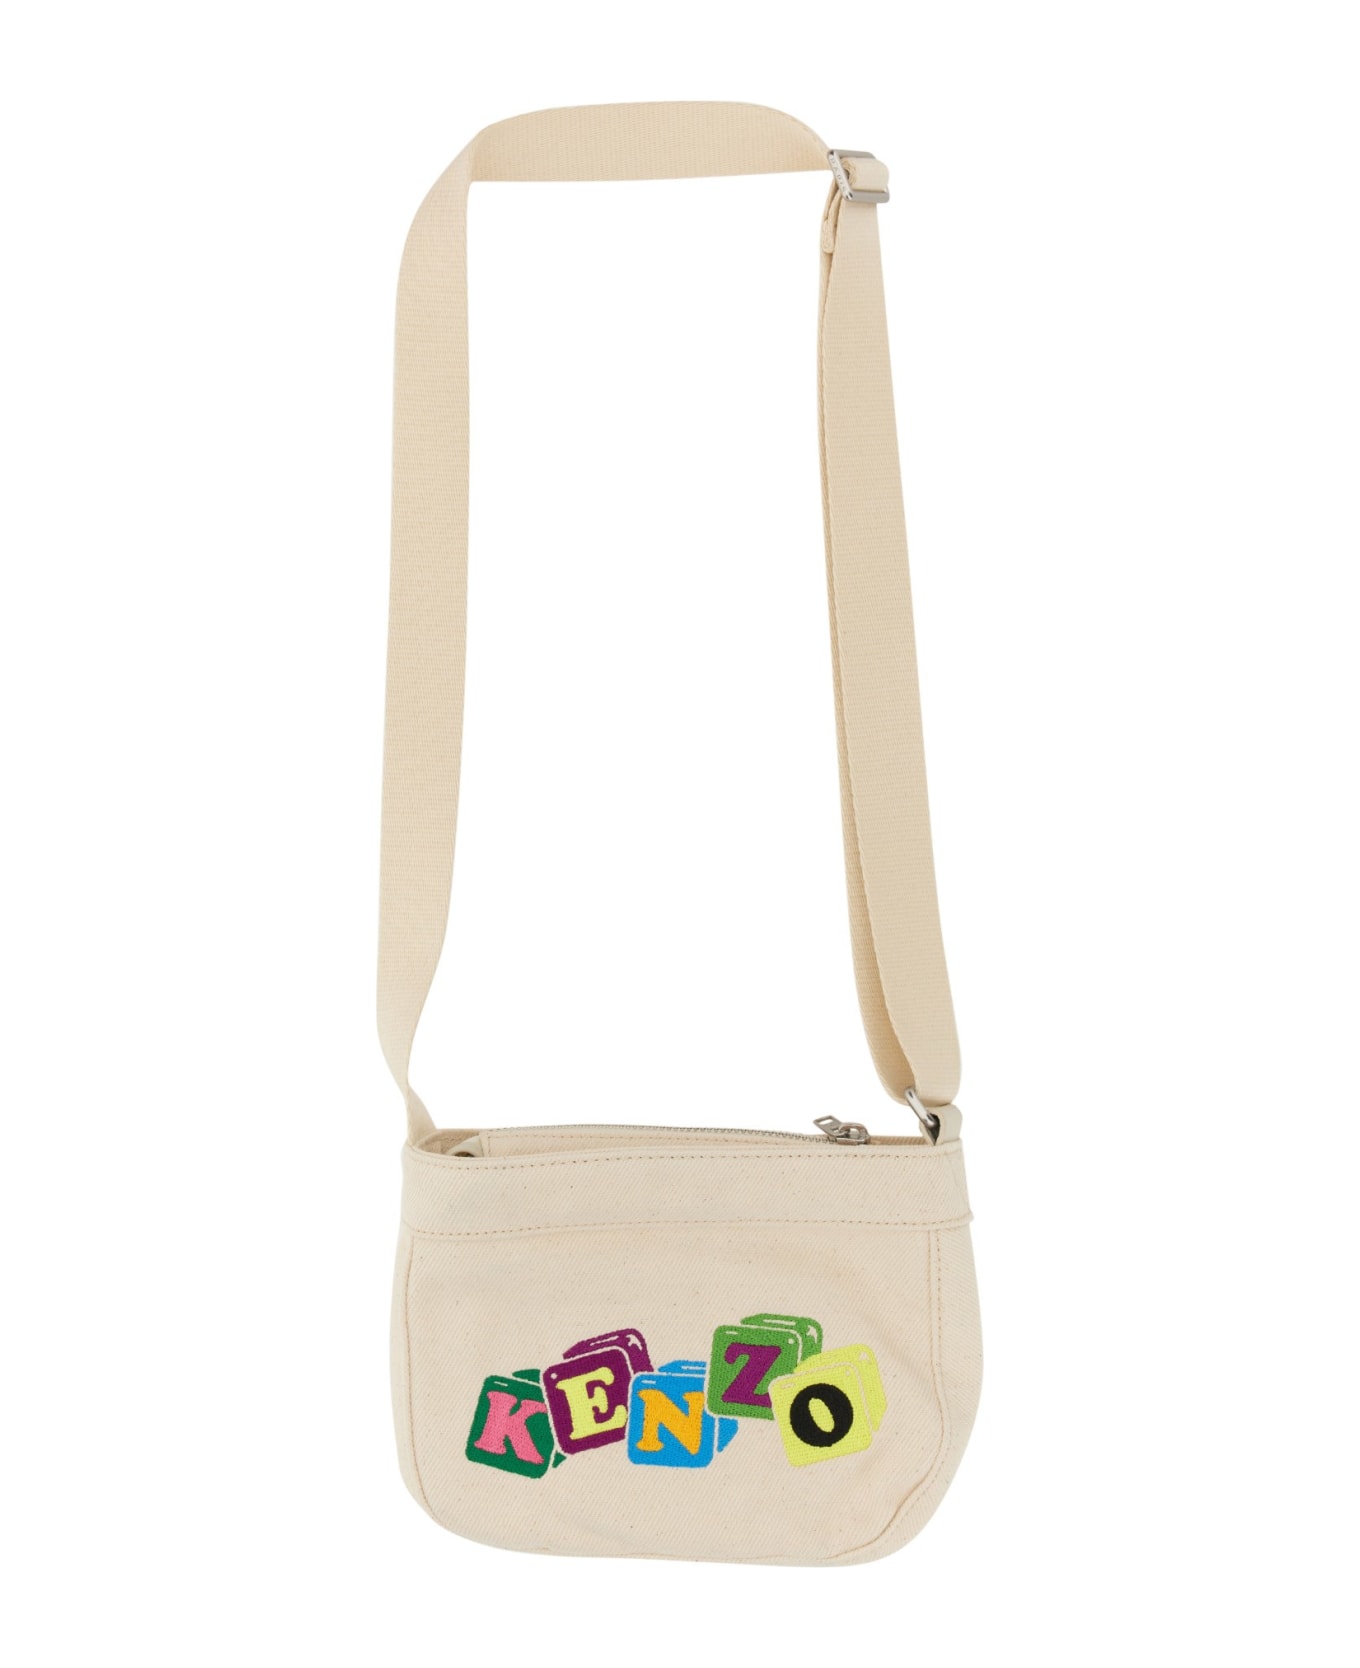 Kenzo Boke Bag With Print - CIPRIA